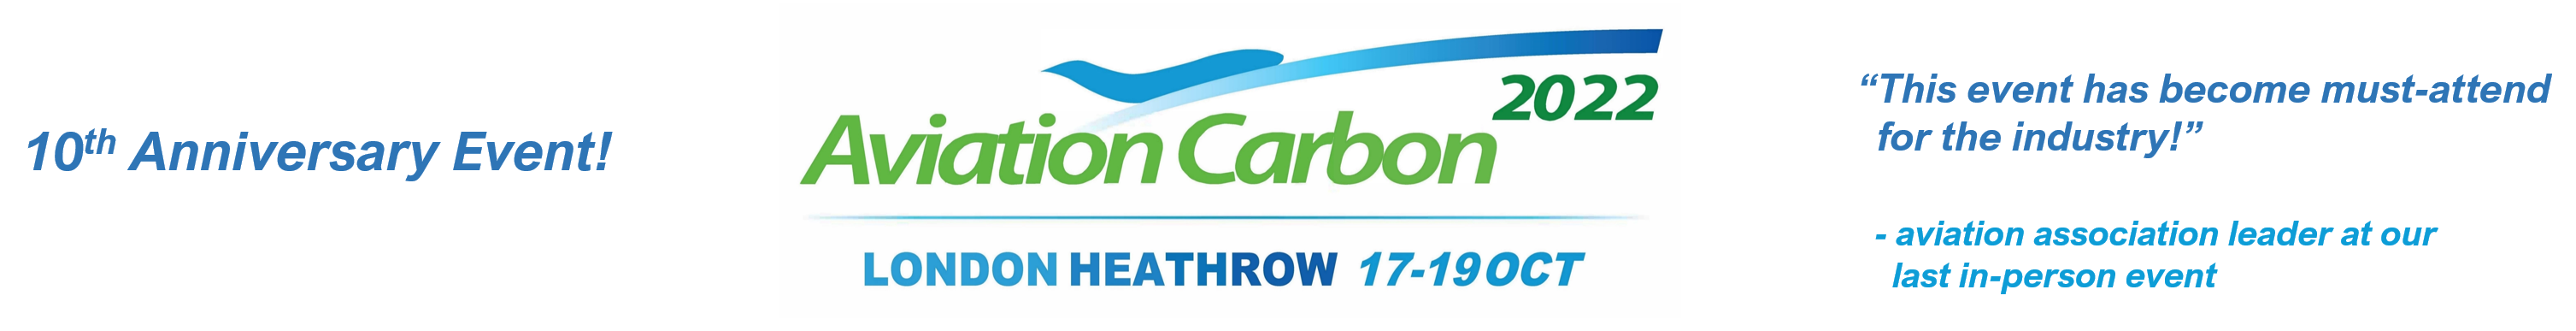 Aviation Carbon